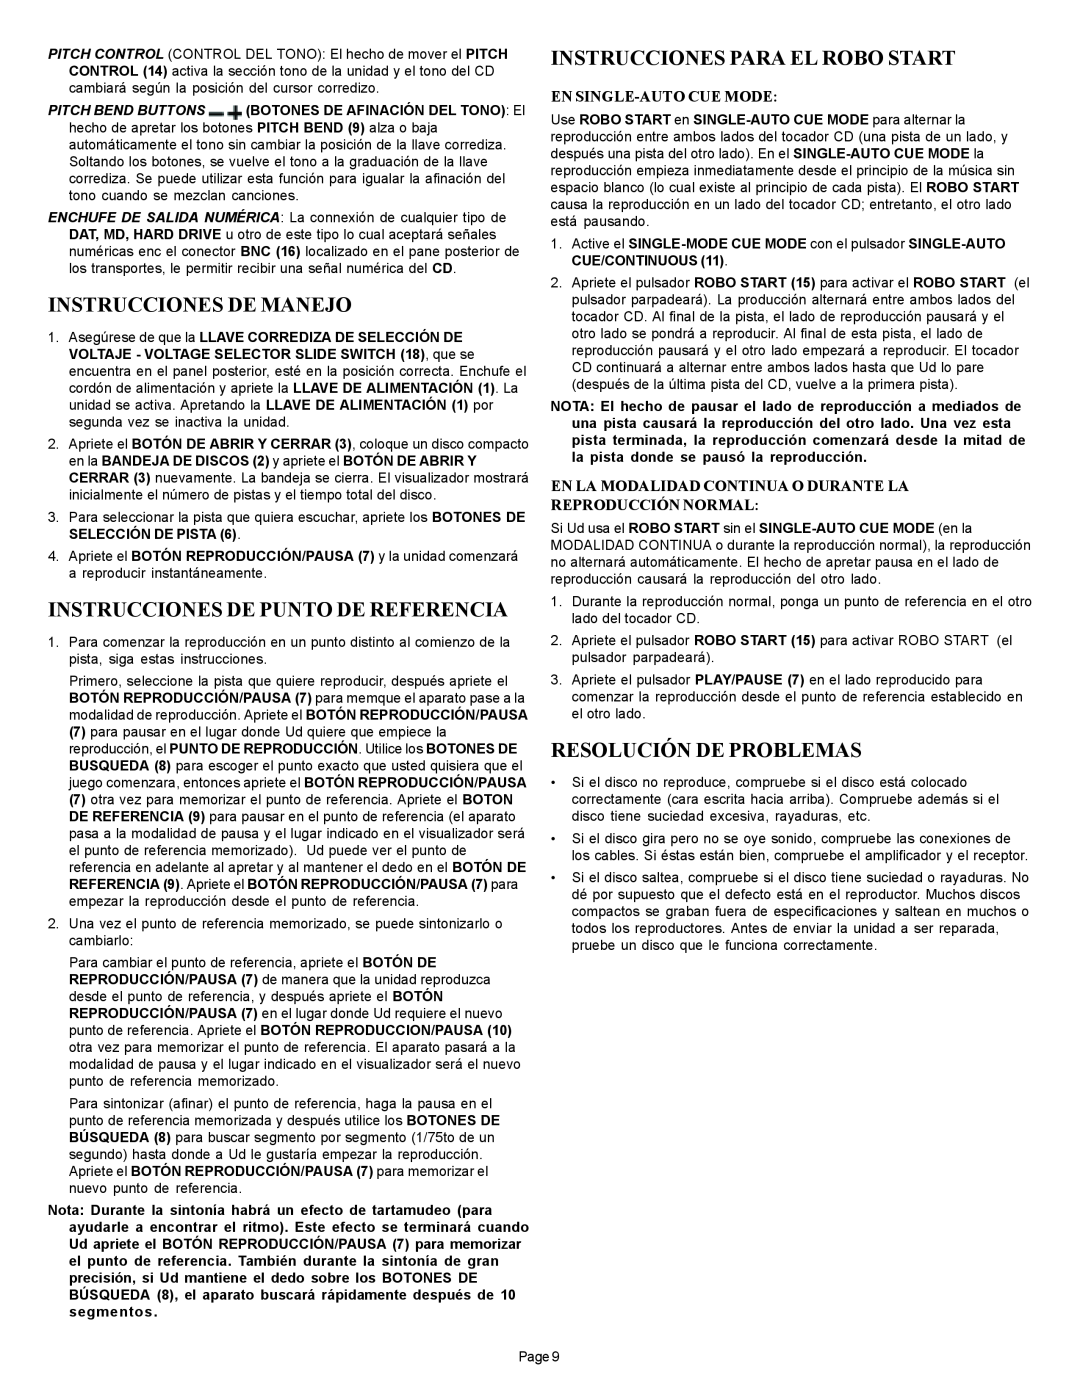 Gemini CD-210 manual Instrucciones De Manejo, Instrucciones De Punto De Referencia, Instrucciones Para El Robo Start 